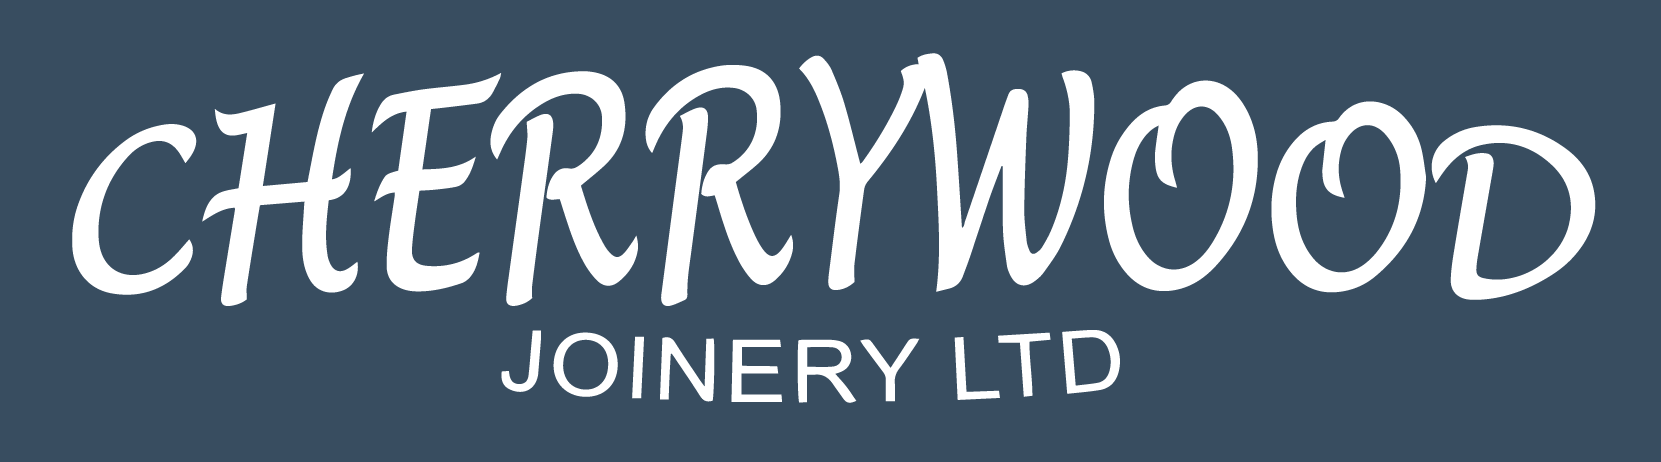 Cherrywood Joinery Ltd